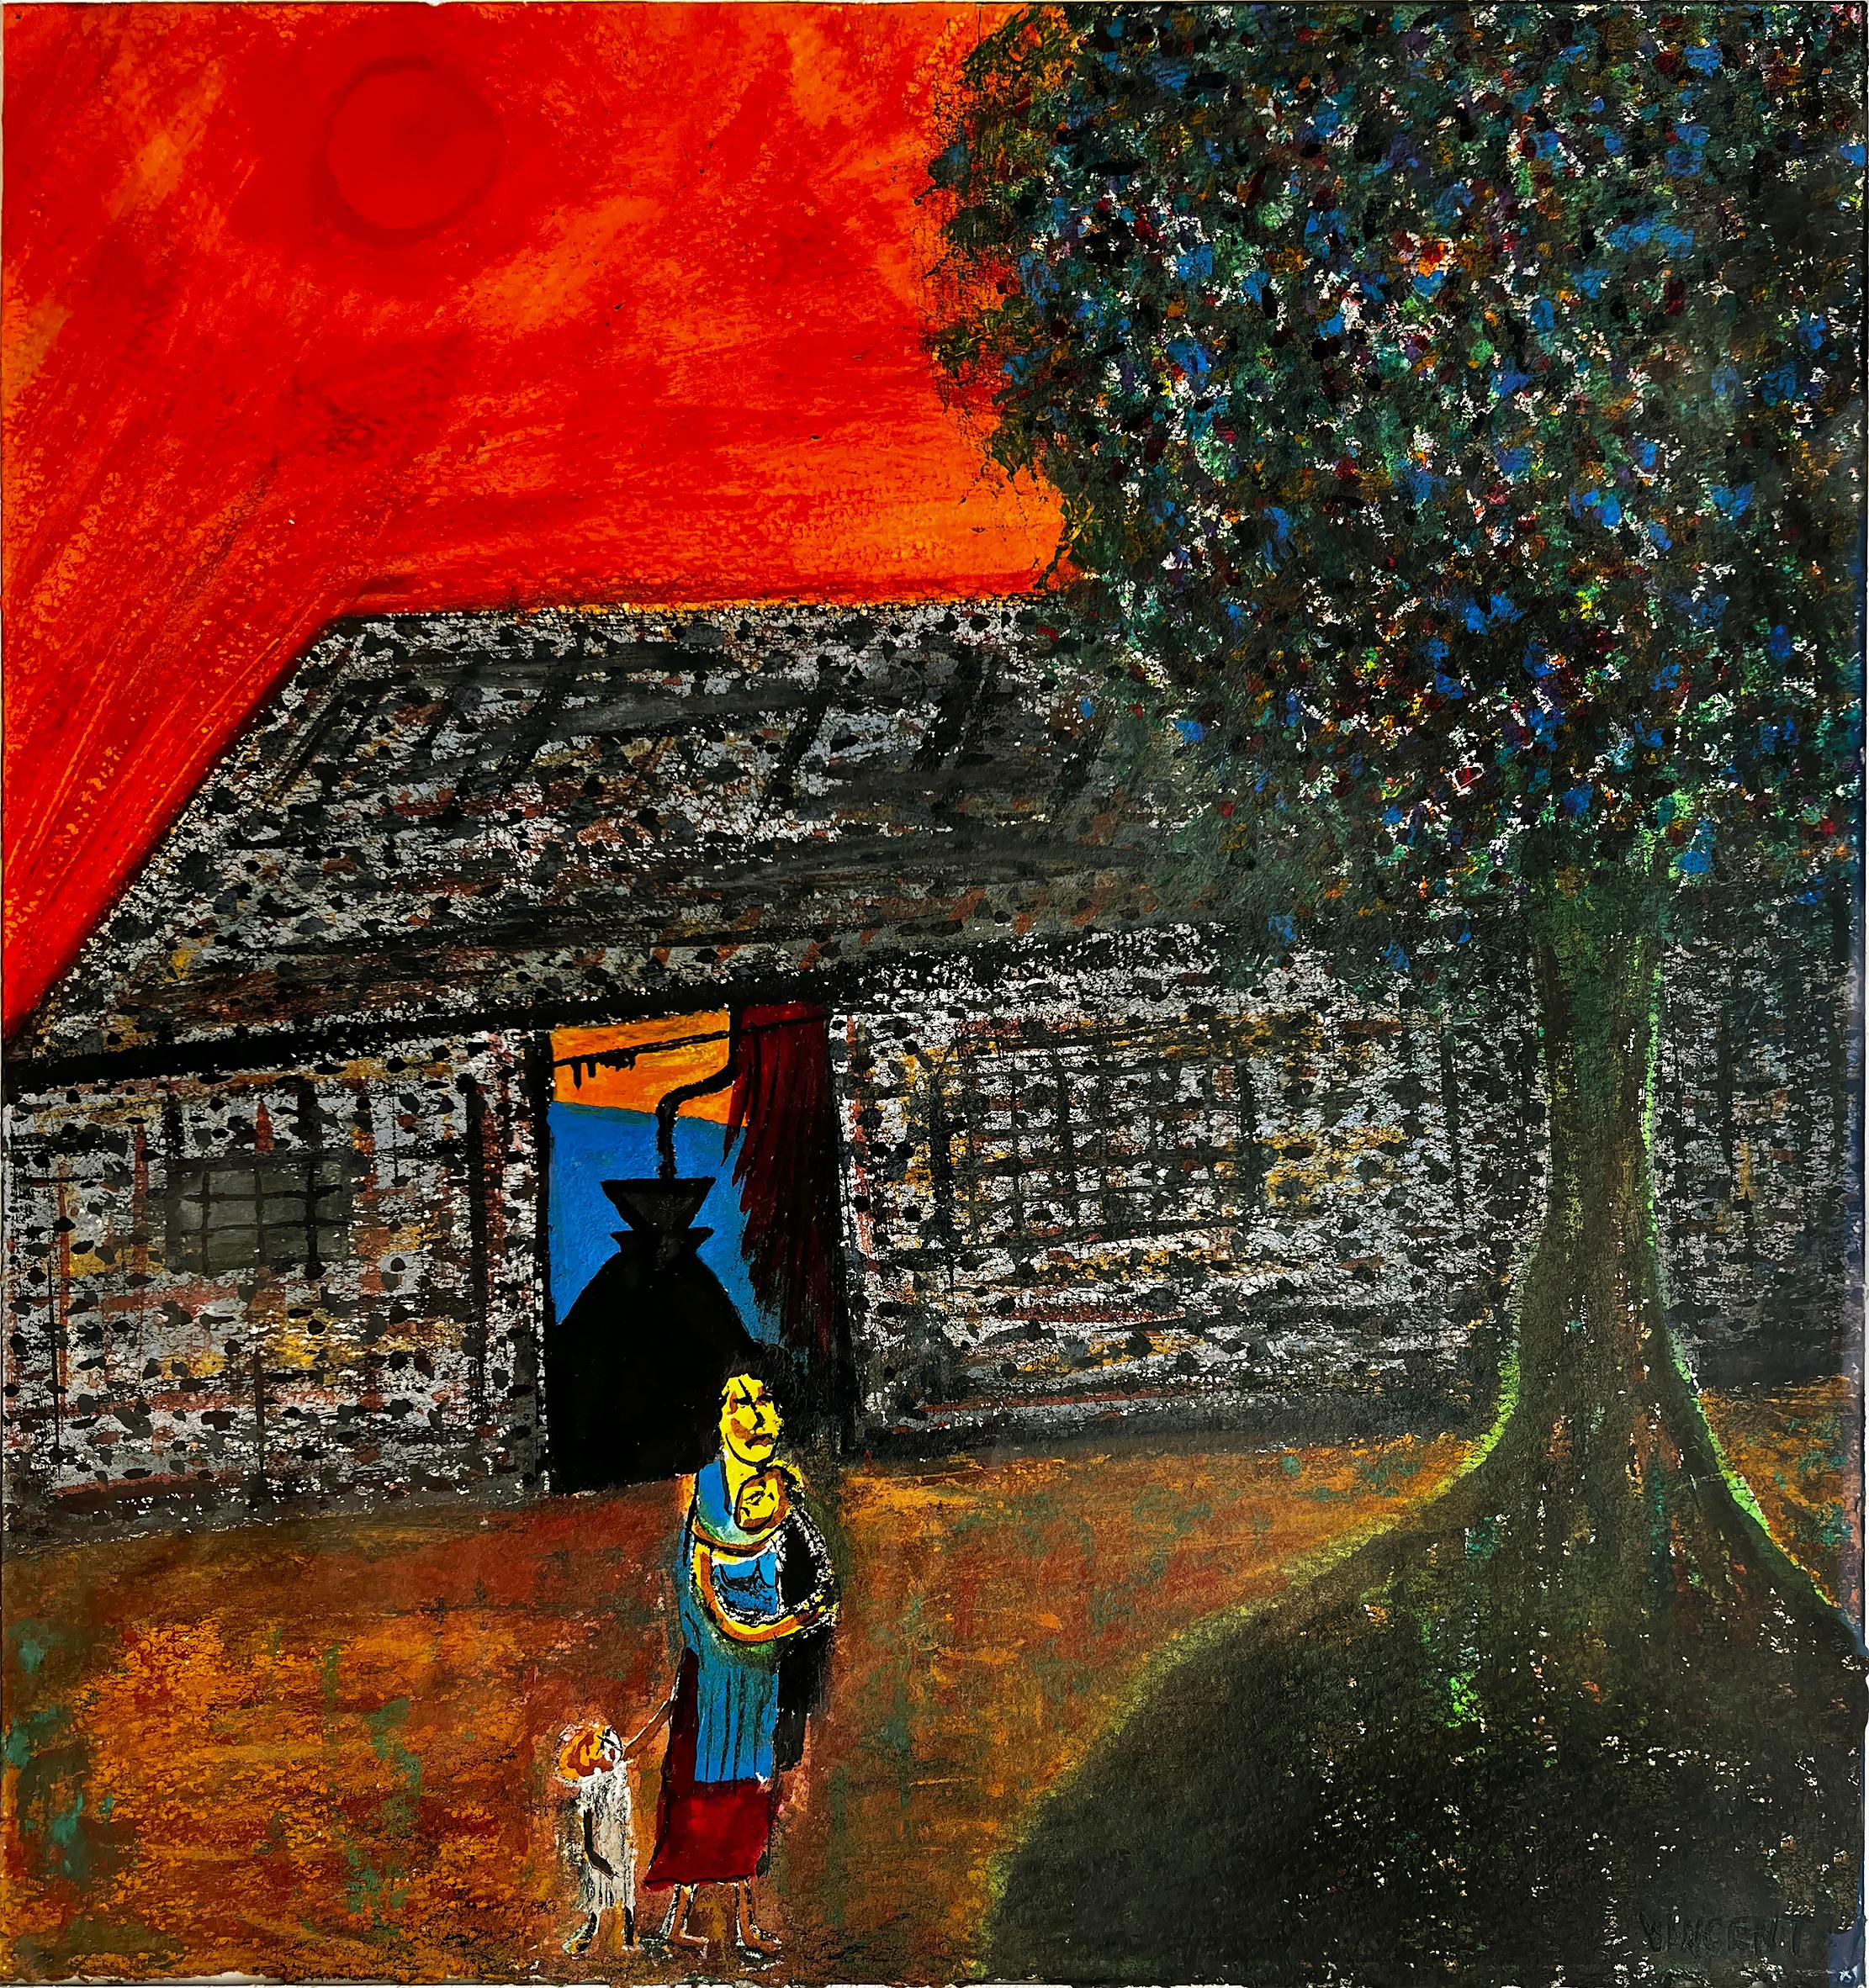  Vincent D. Smith Landscape Painting - Home, African Village Scene Orange Sky, African American Artist